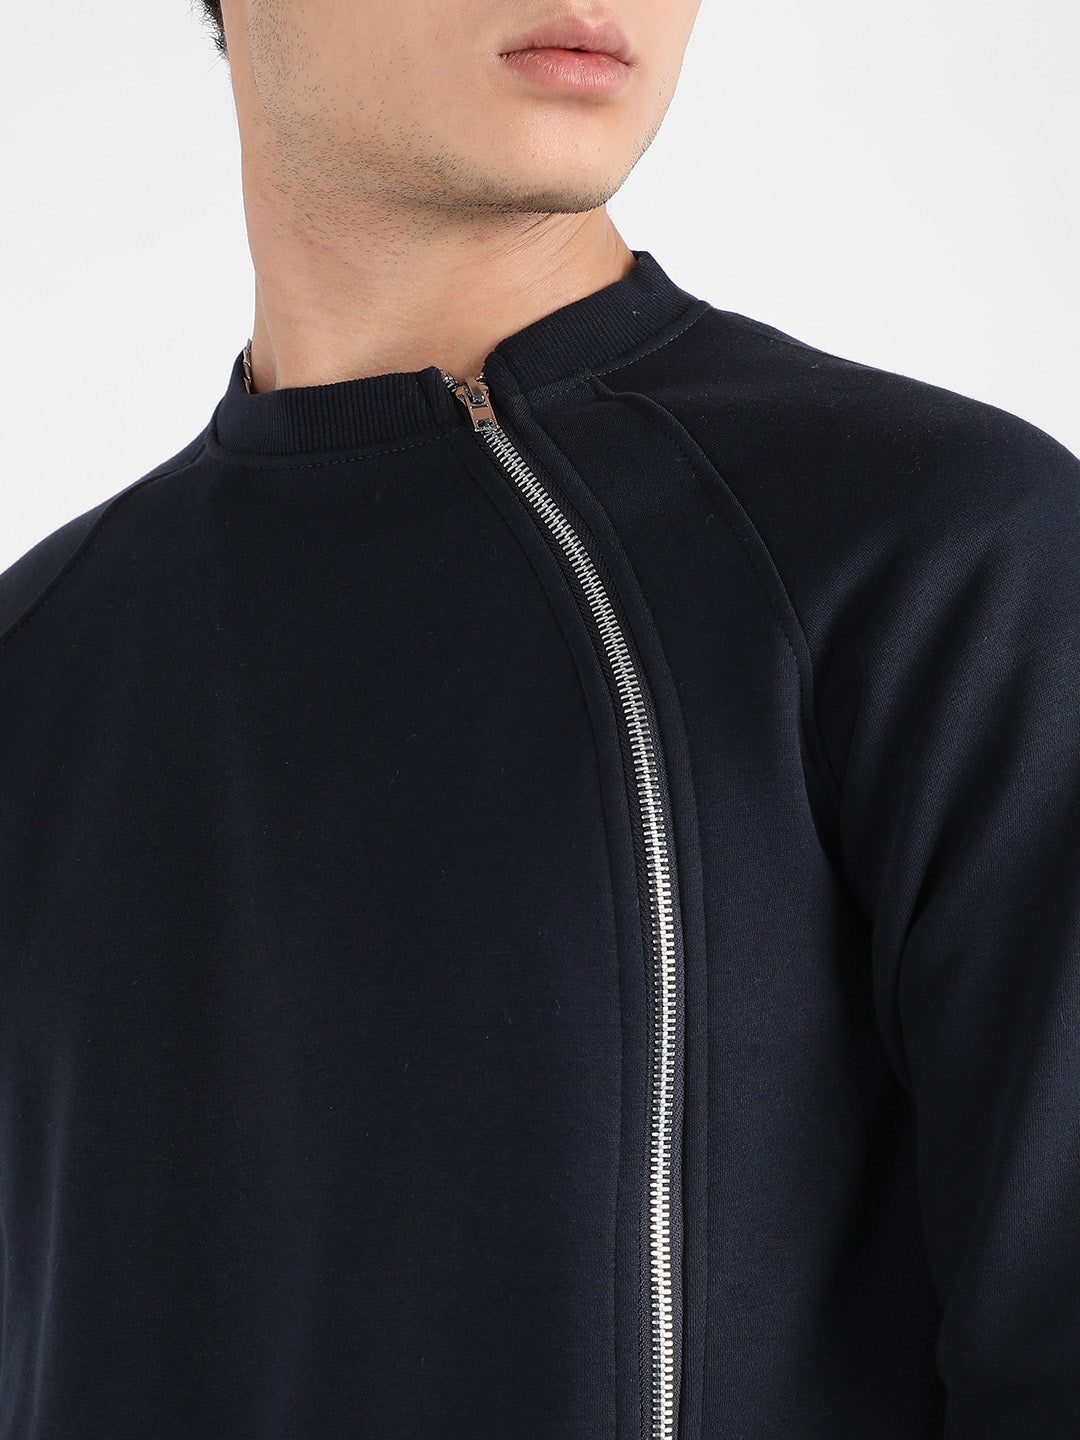 Men's Navy Blue Sweatshirt With Asymmetriclal Zip